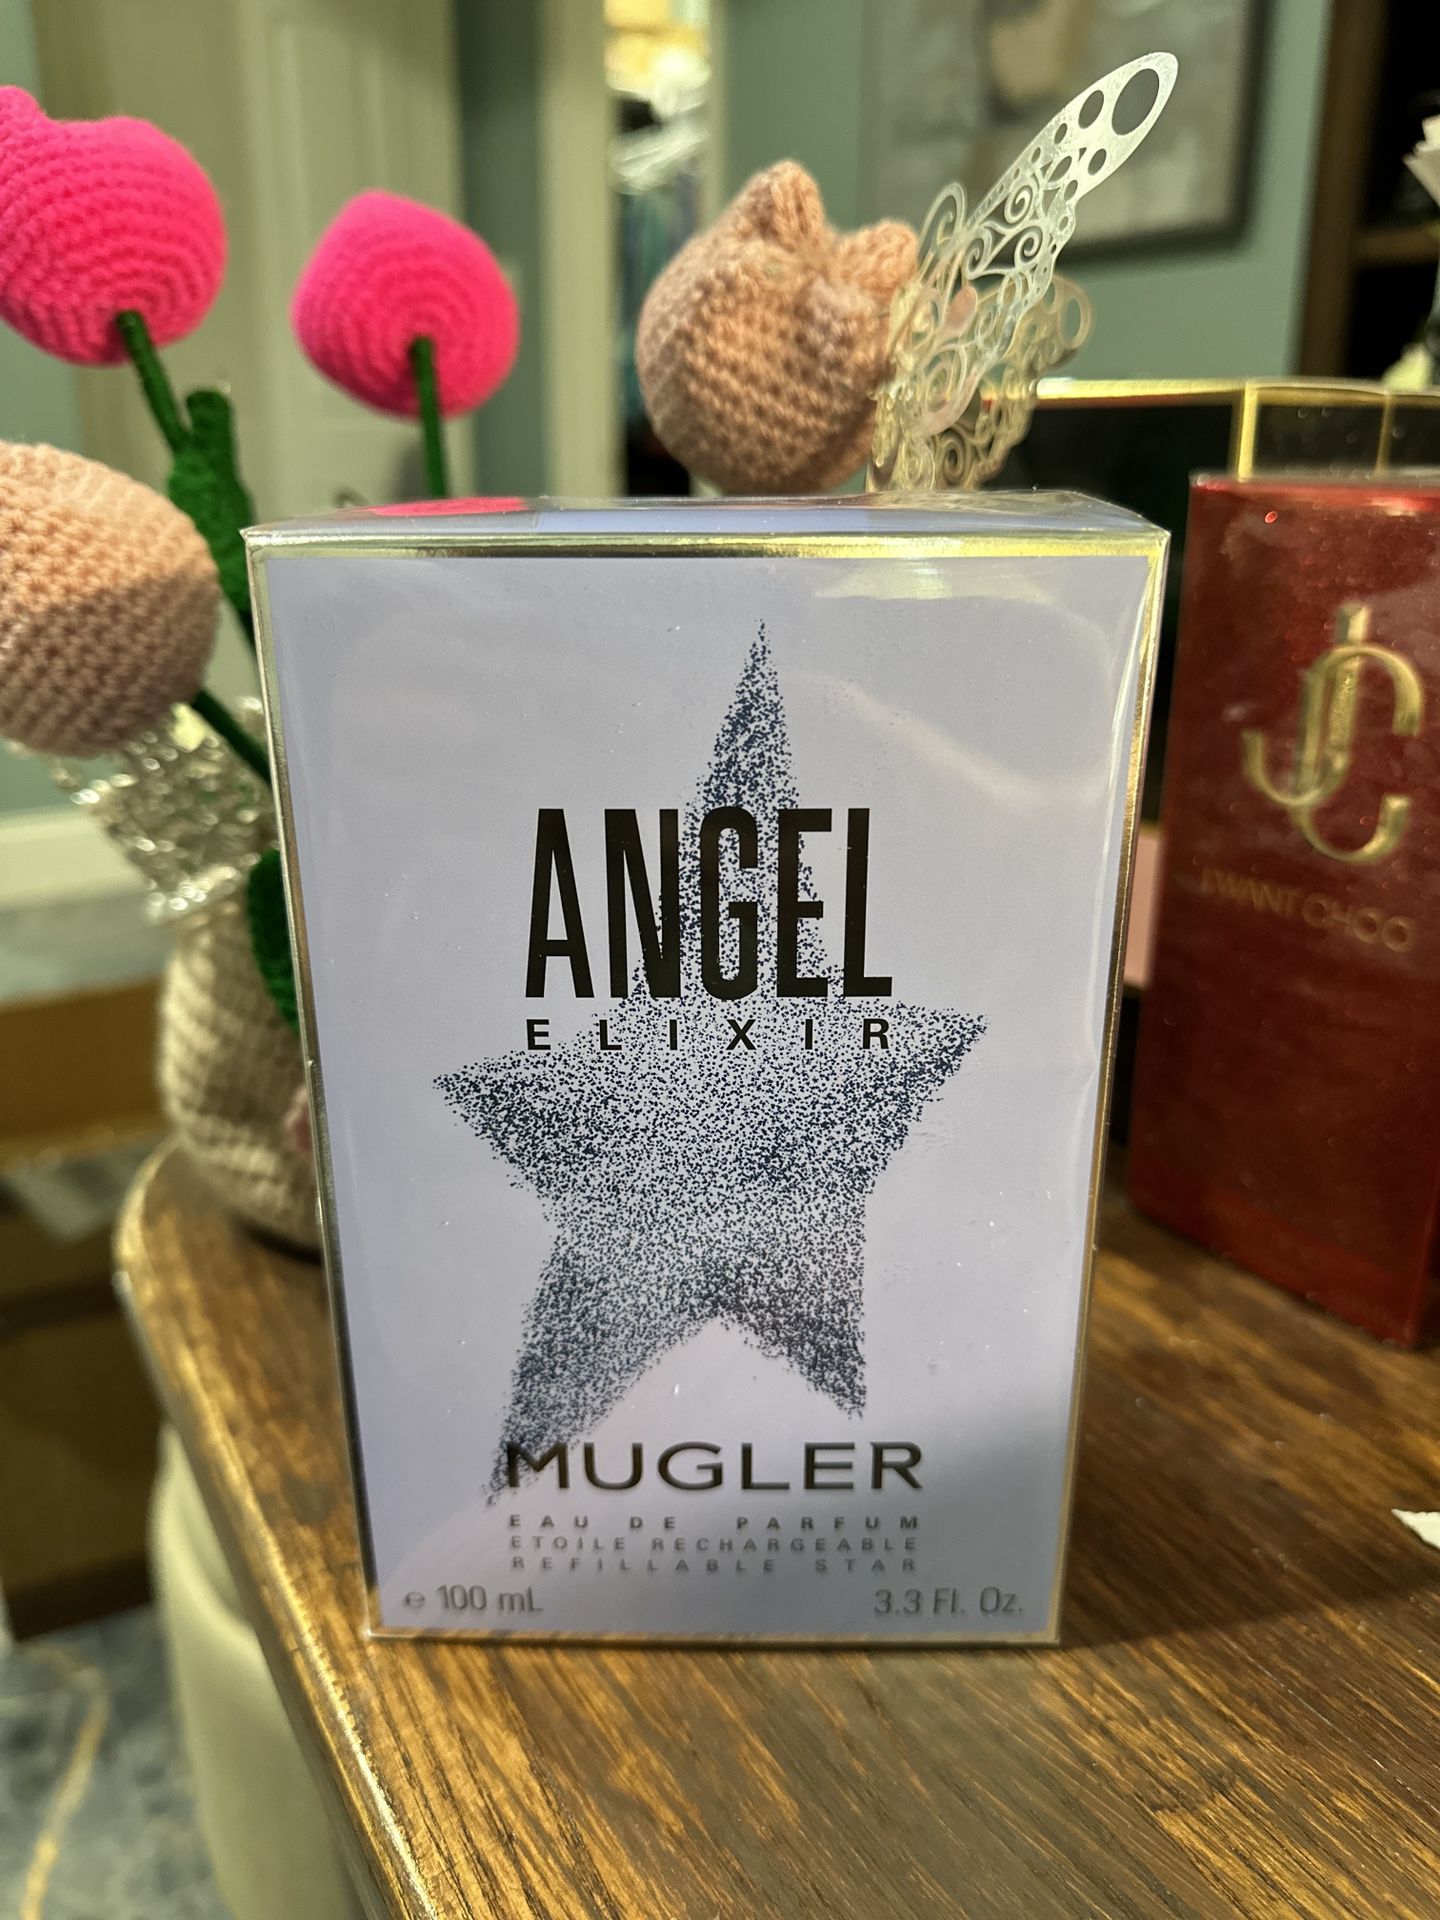 Angel Mugler 